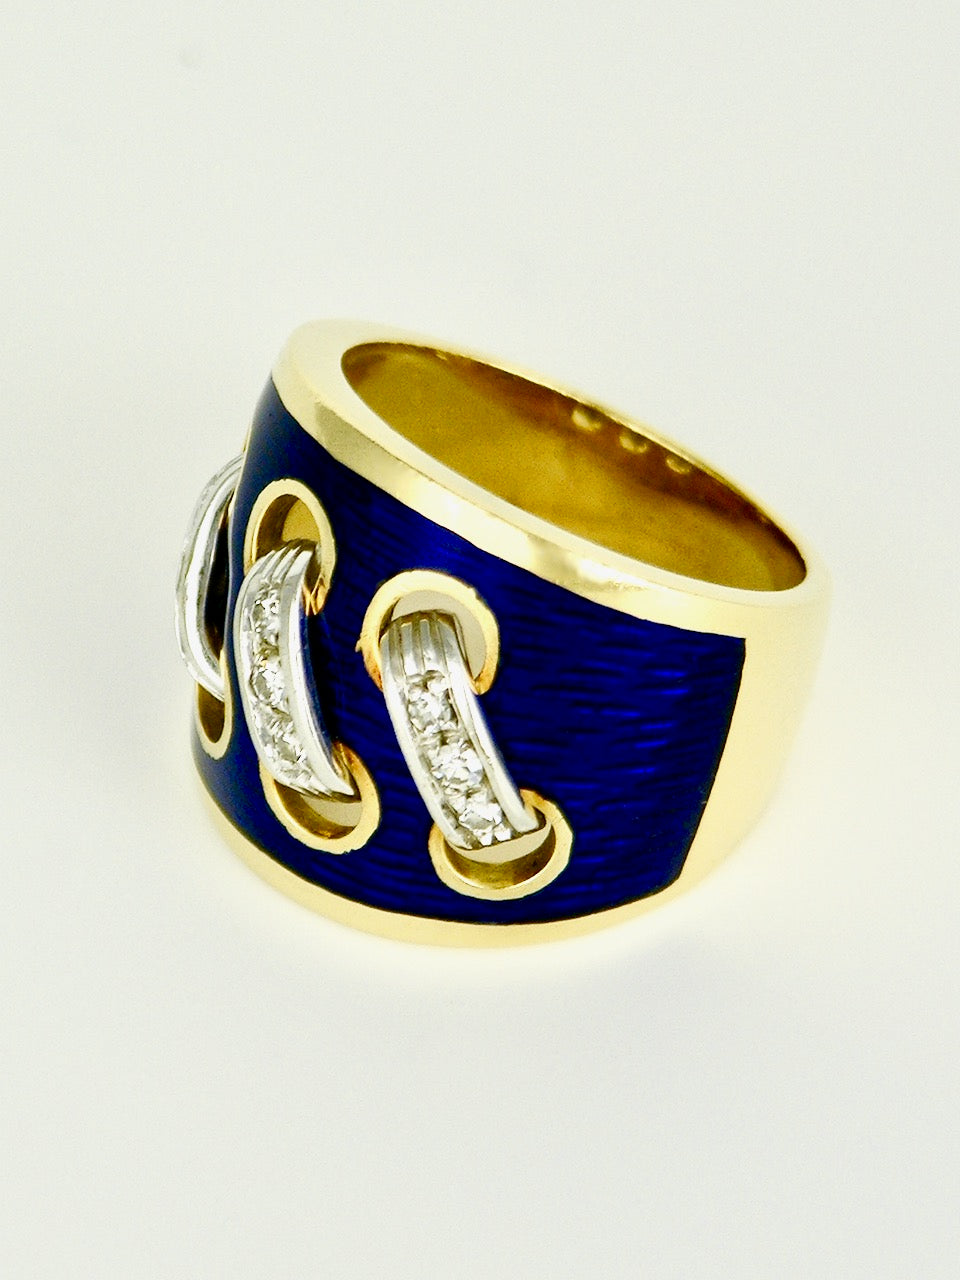 Vintage Italian 18k Yellow Gold Diamond and Blue Enamel Ring 1960s